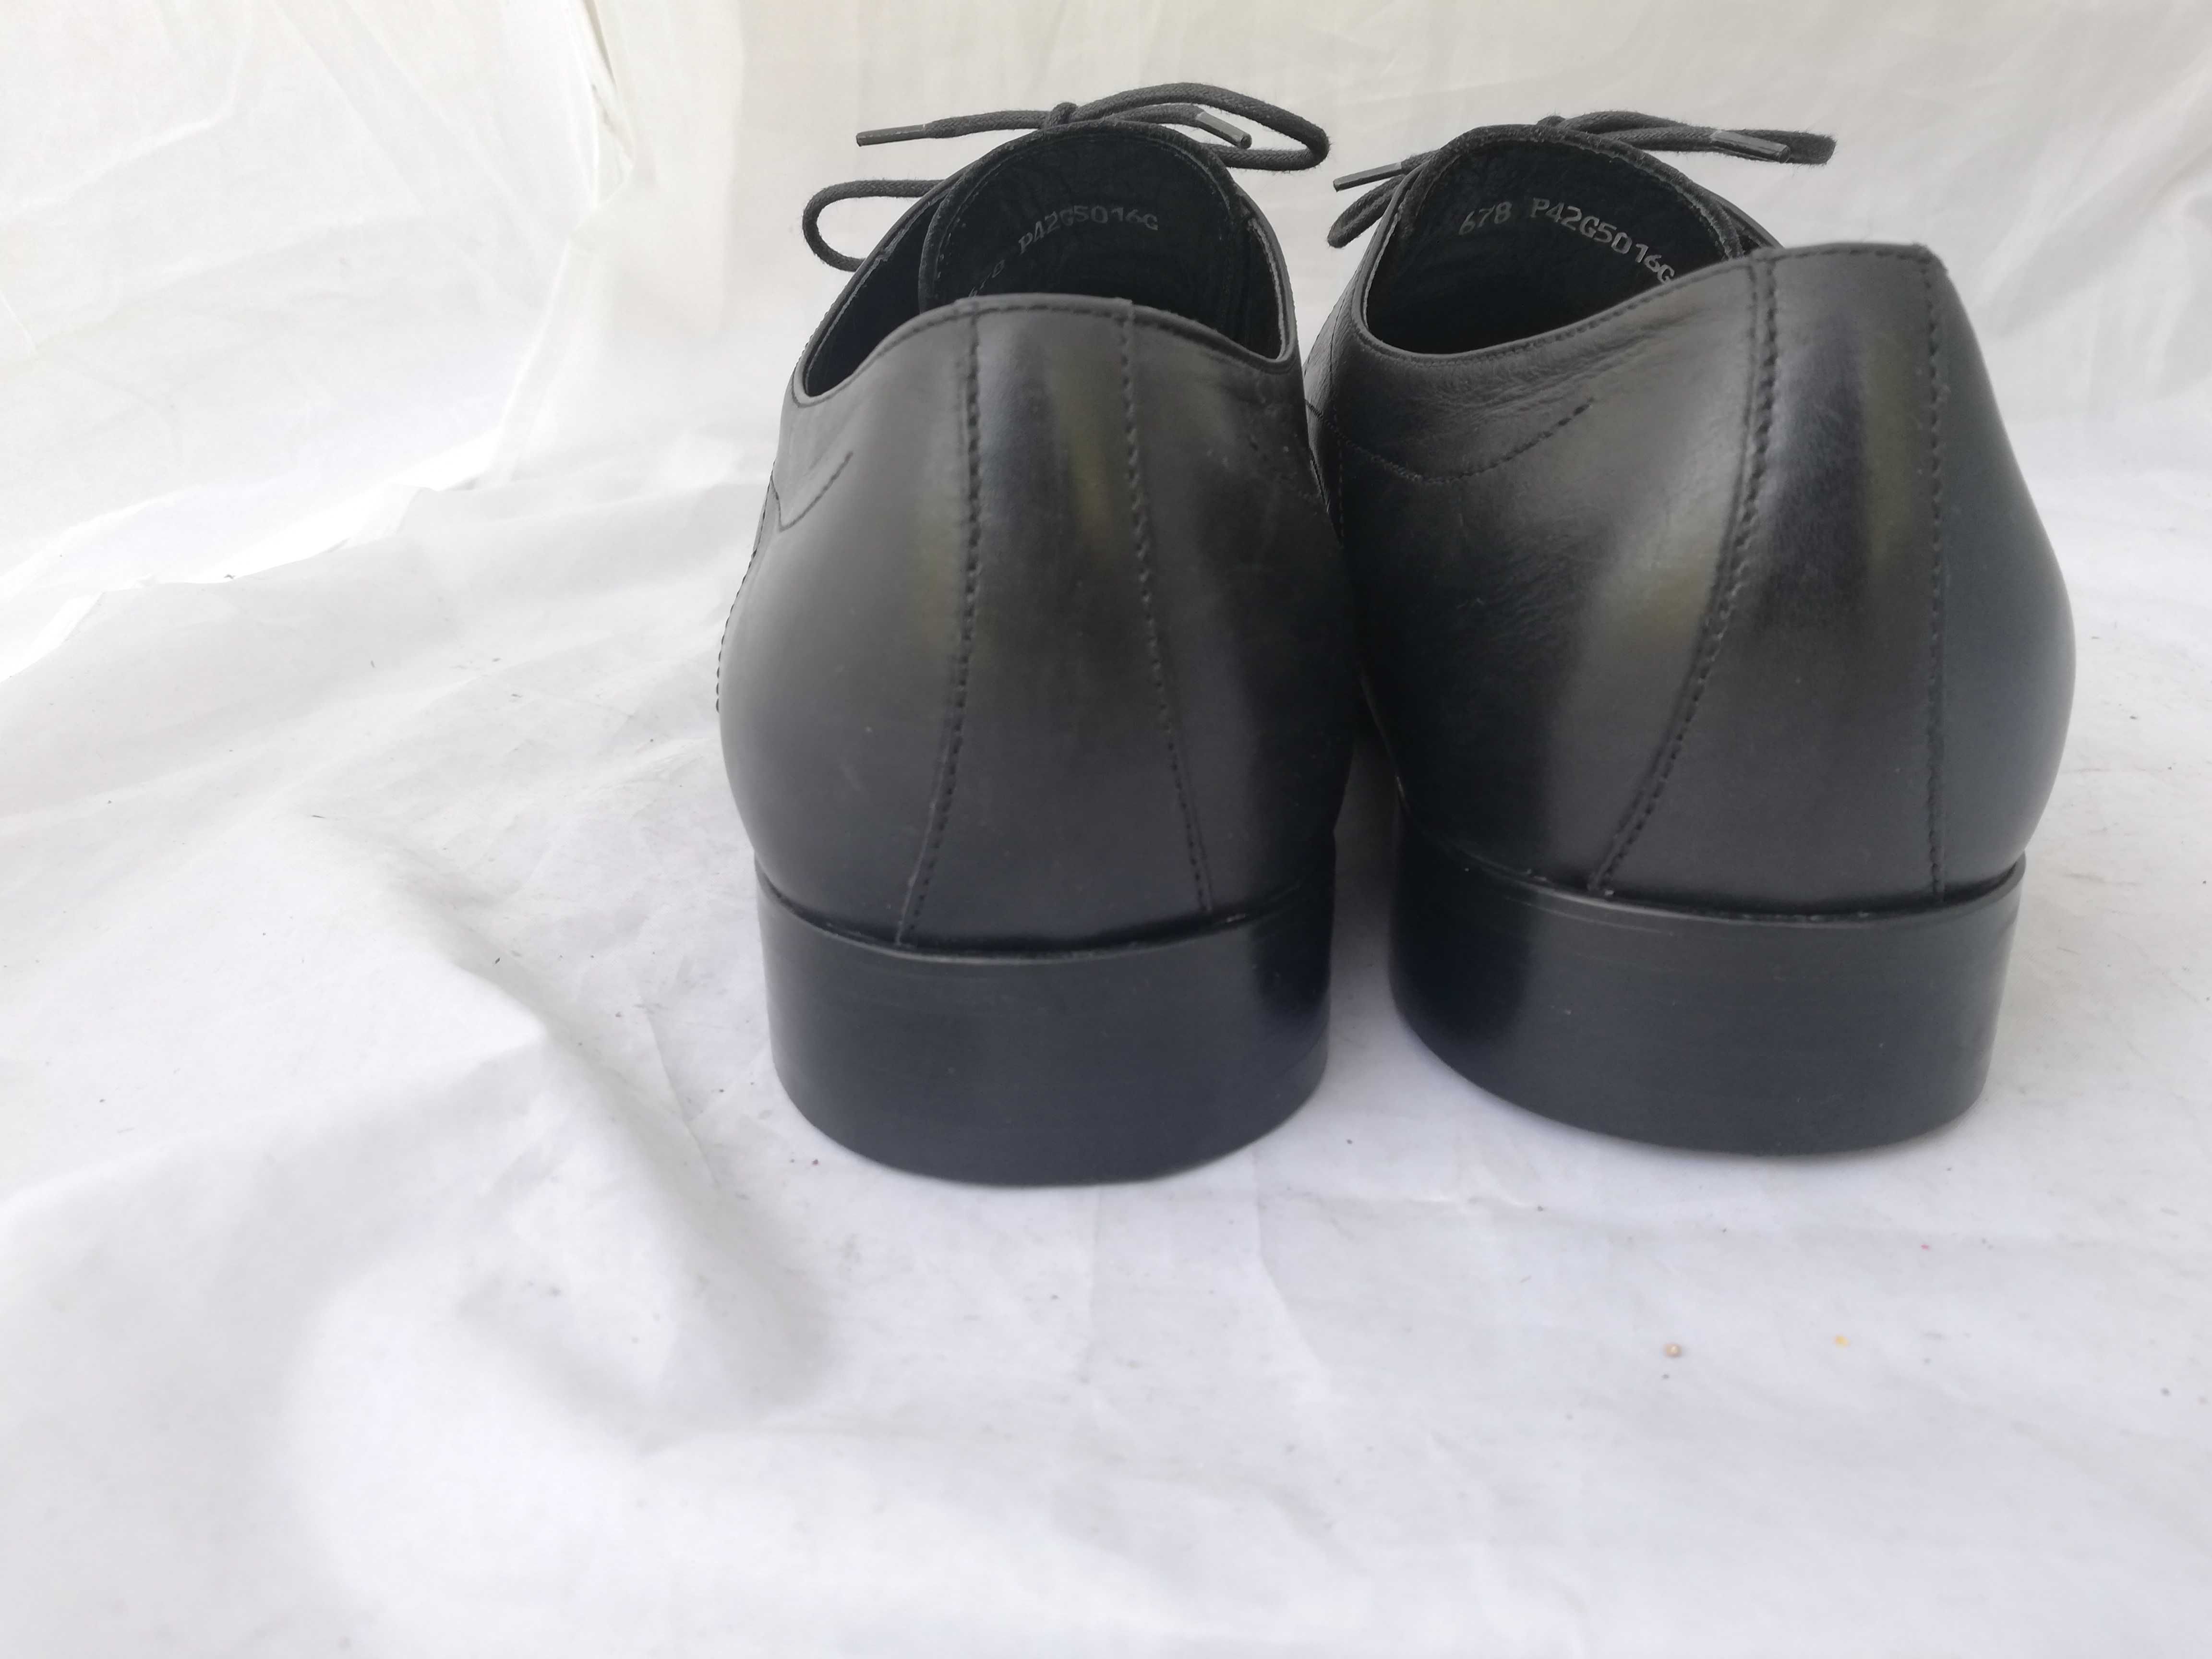 Buty skórzane Pilpol r. 42 , wkładka 29 cm